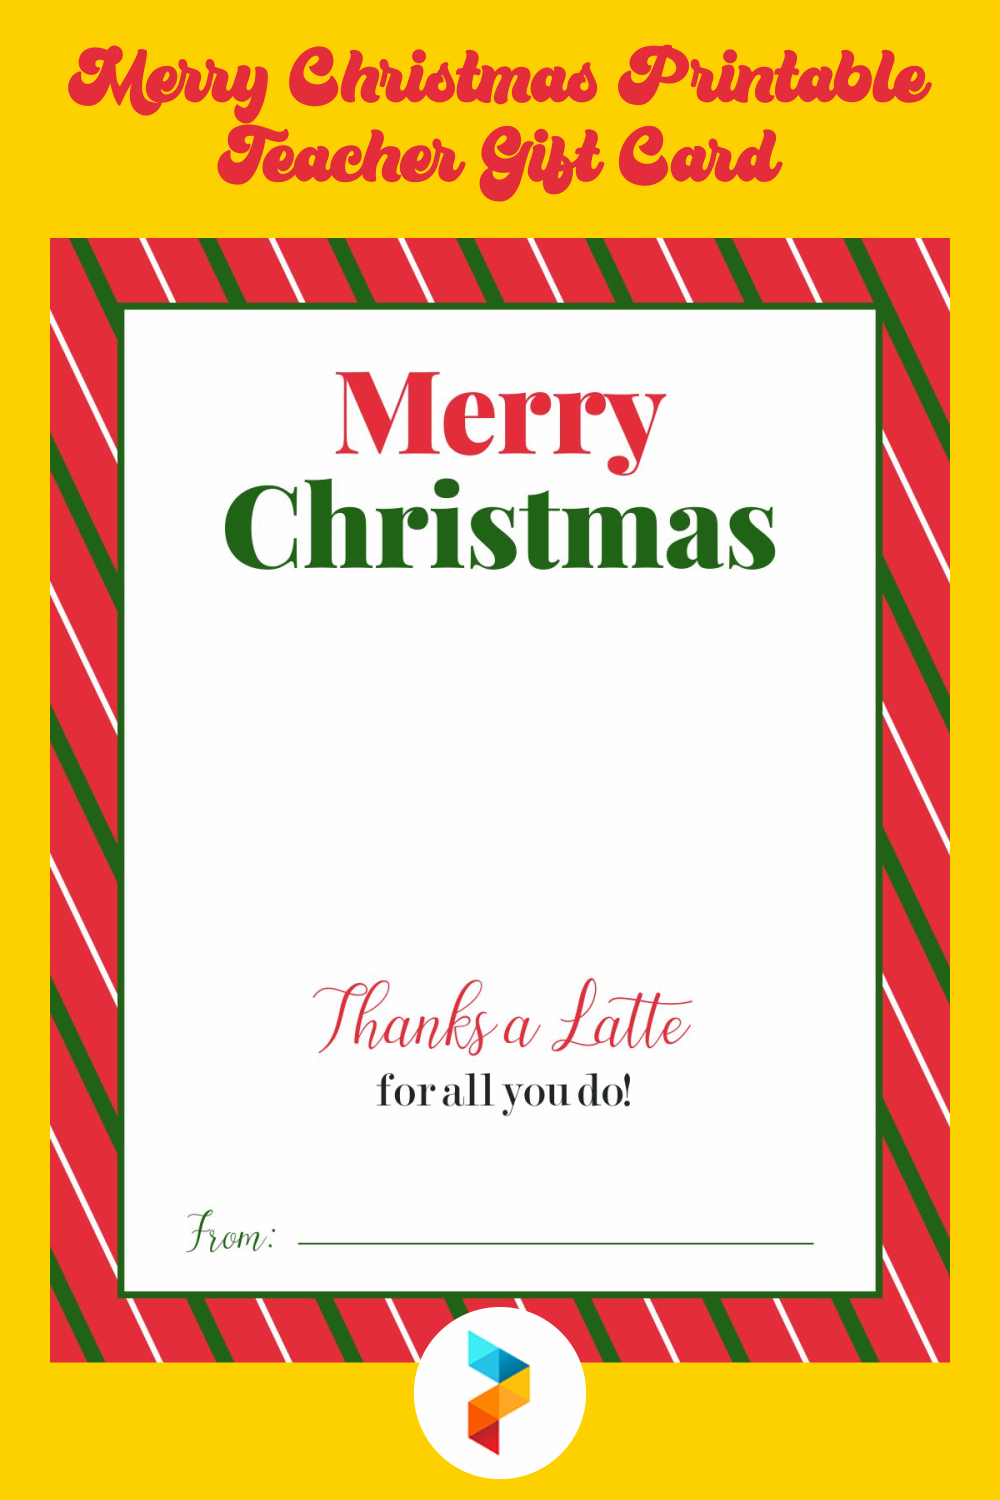 Merry Christmas Printable Teacher Gift Card